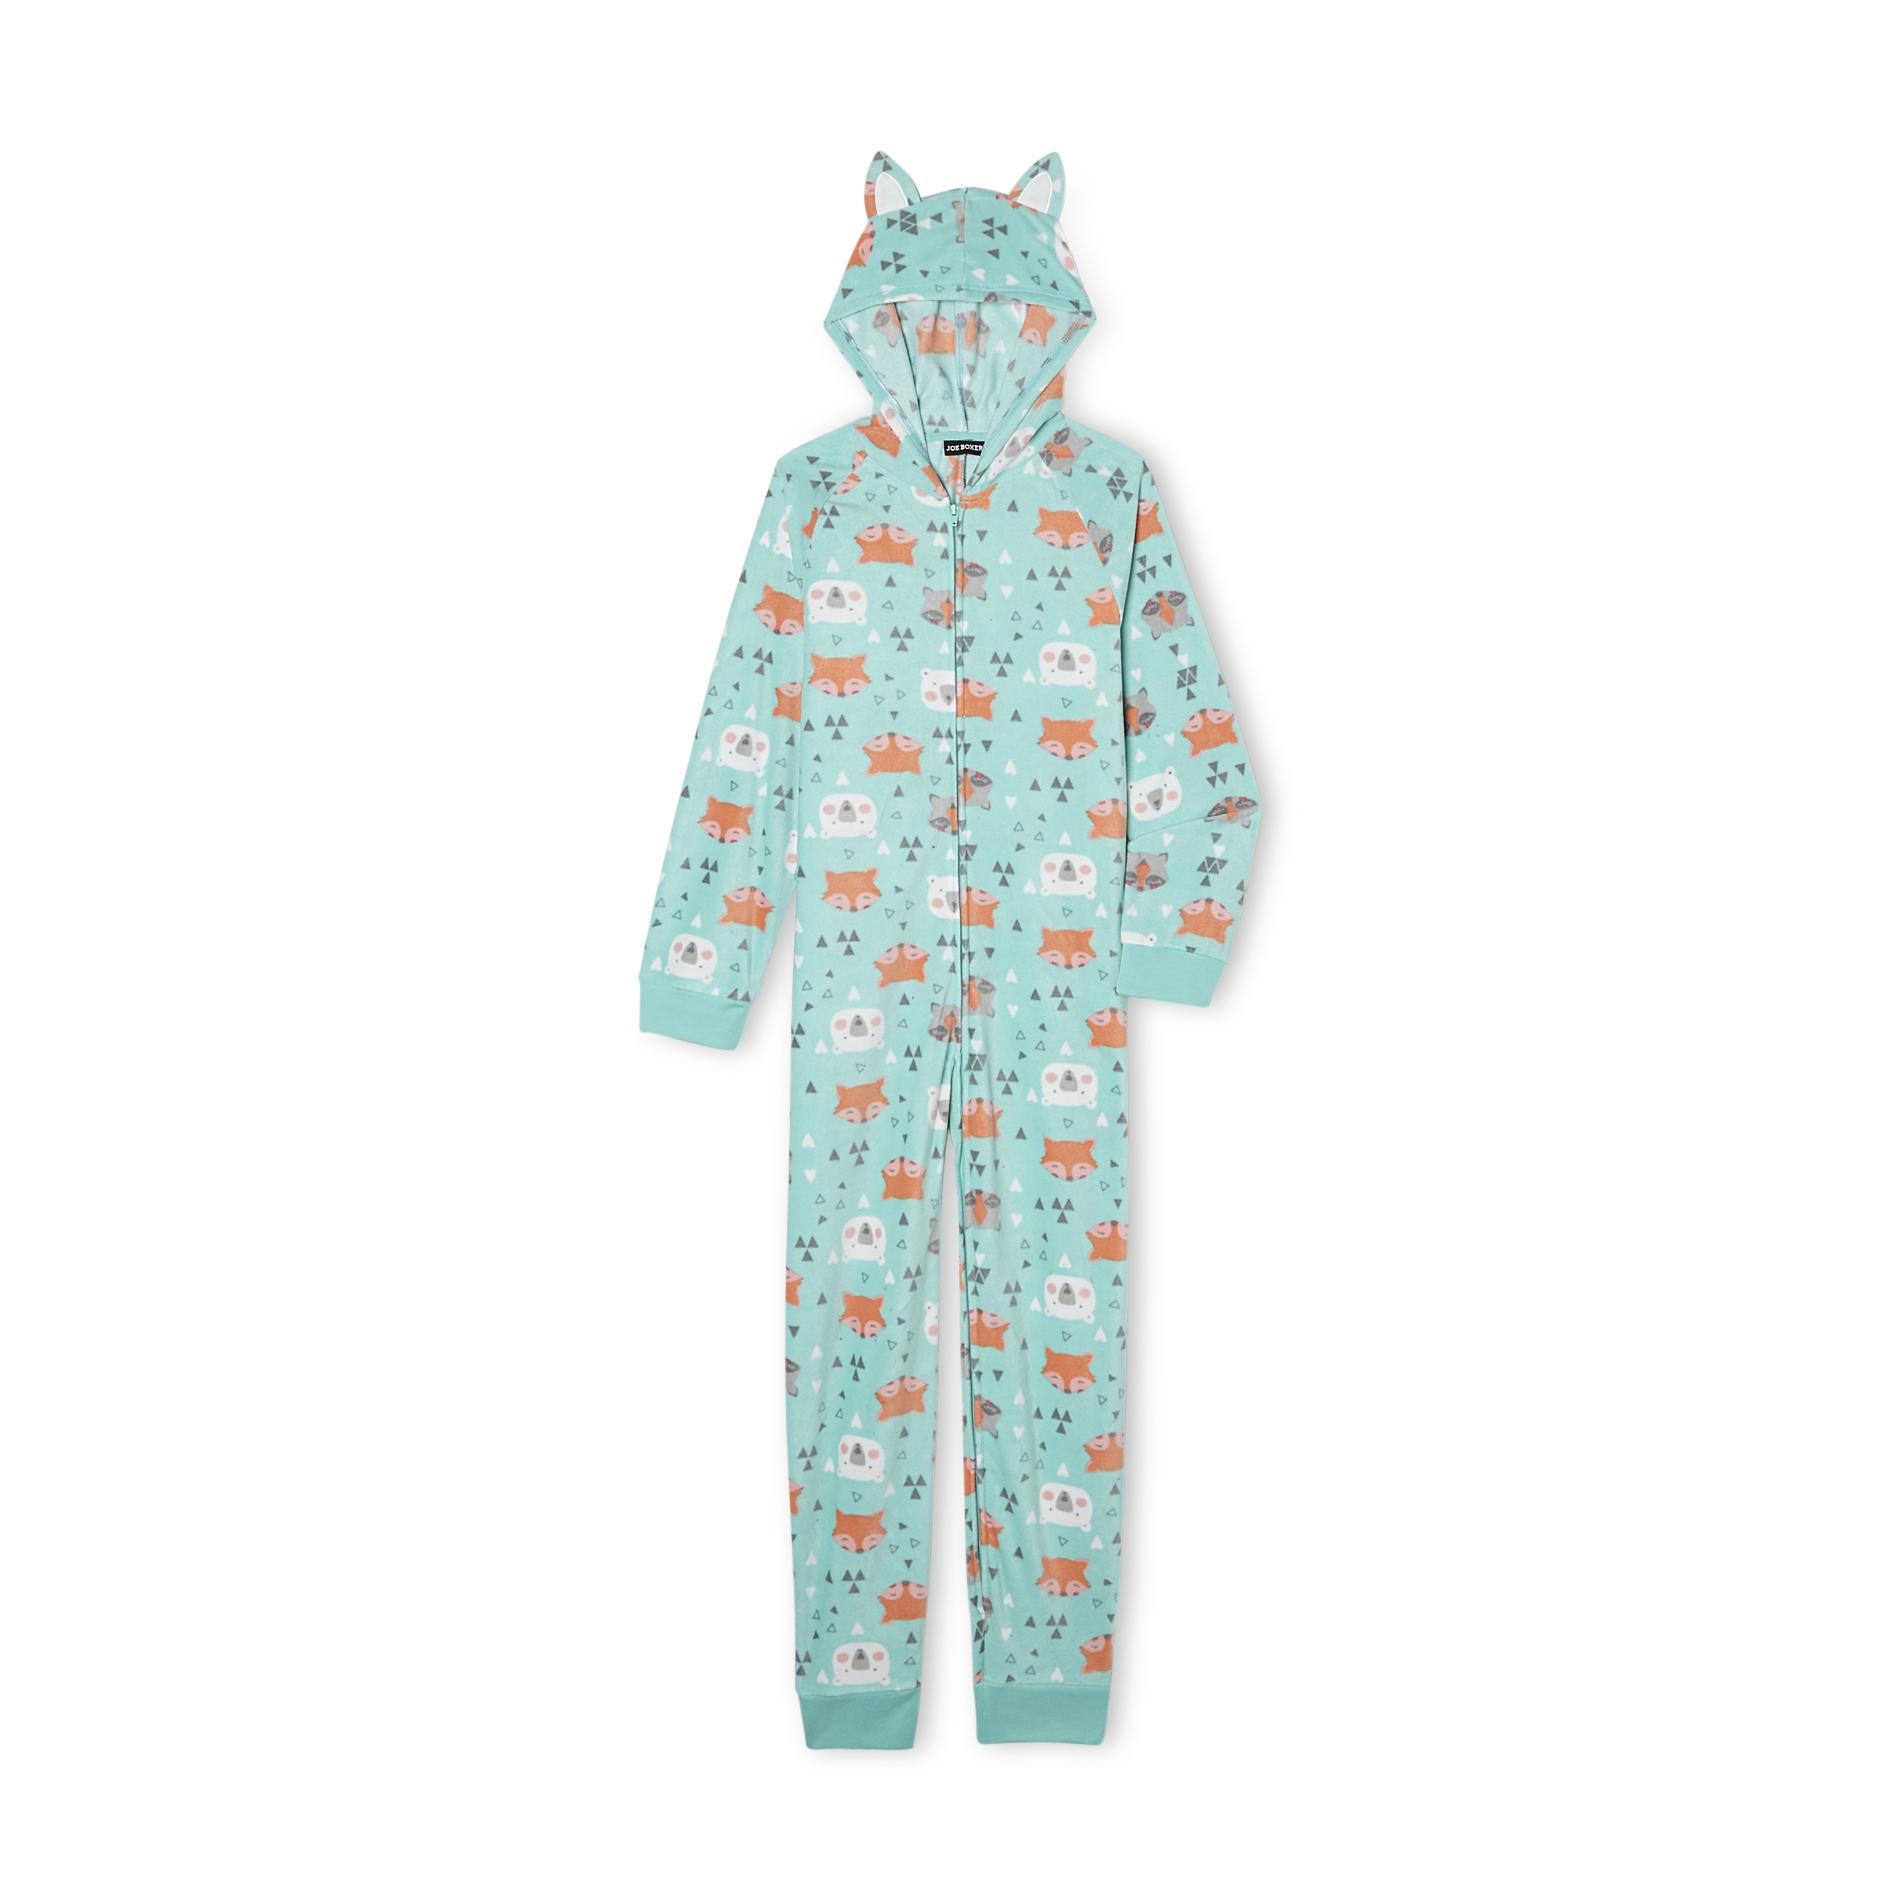 Joe Boxer Girl's Hooded One-Piece Fleece Pajamas - Forest Animals